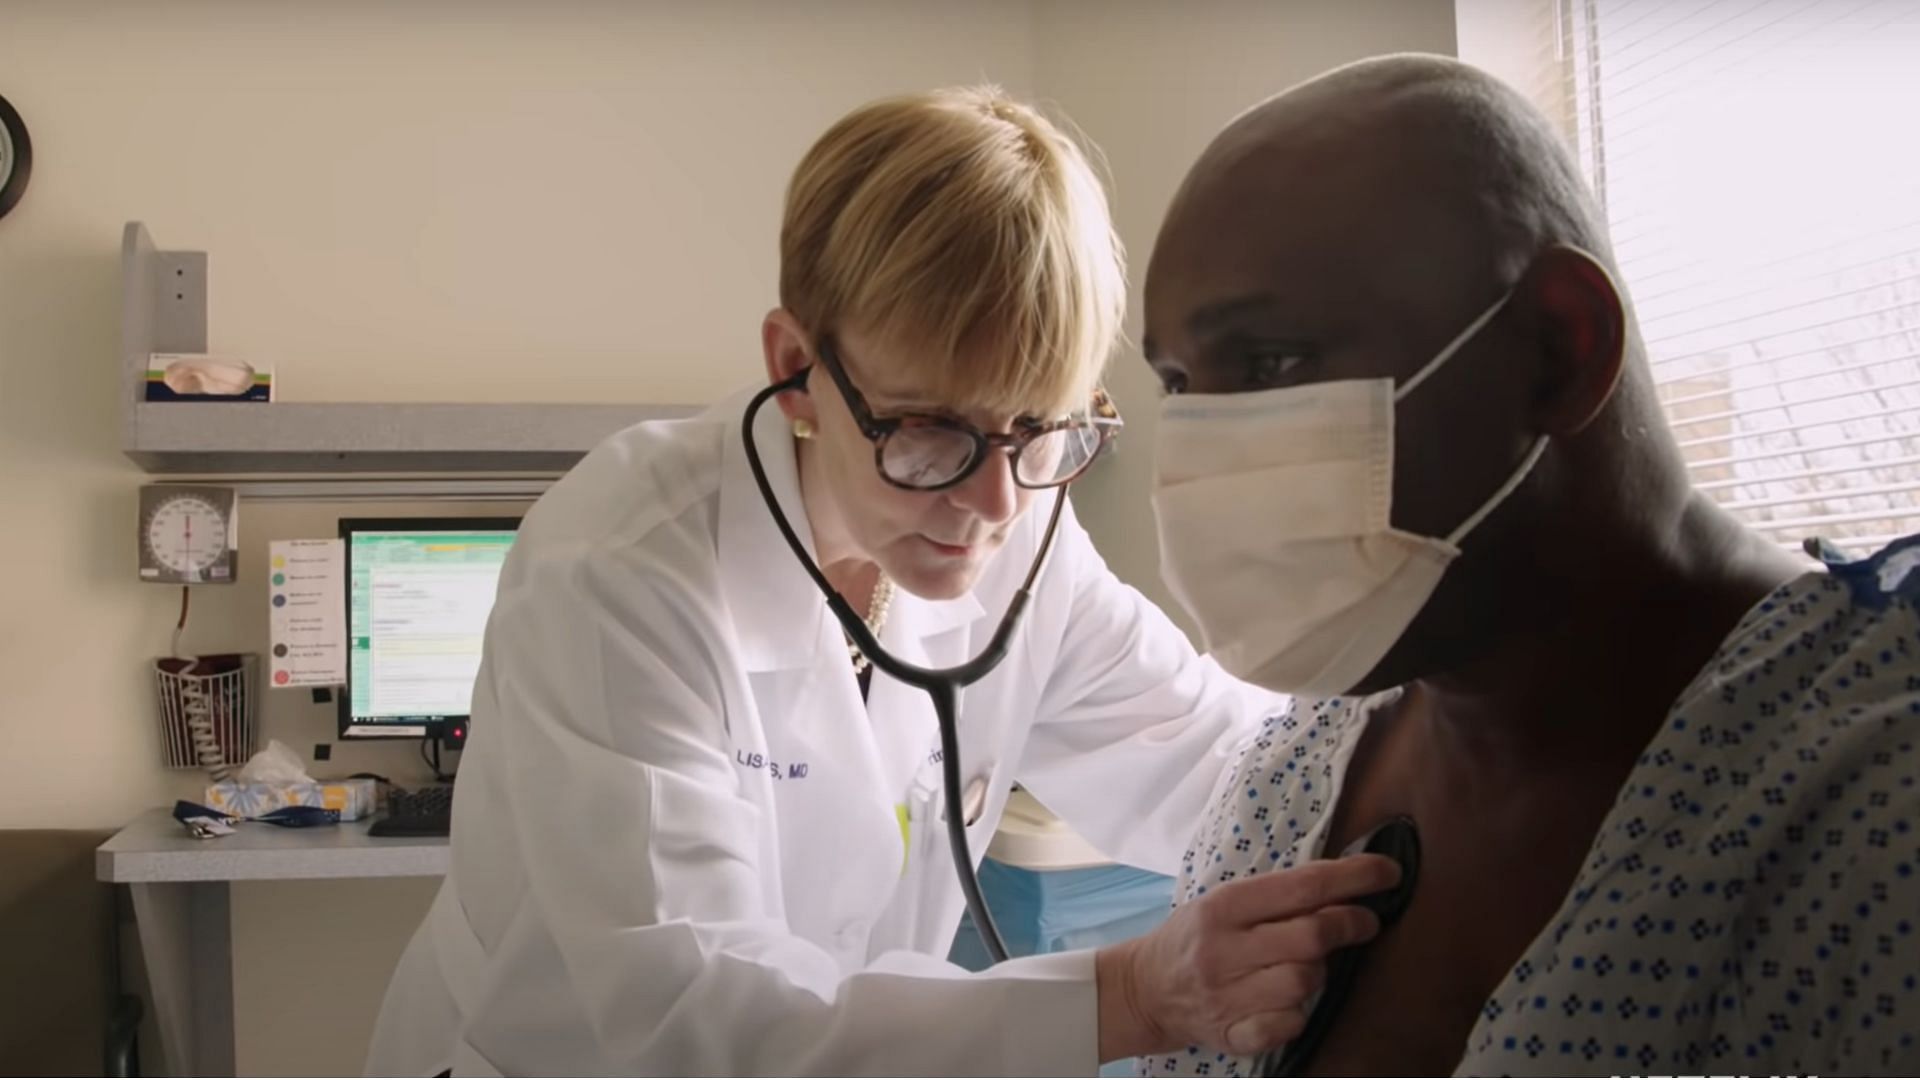 Dr. Sanders helped patients with crowd wisdom (Image via Netflix)